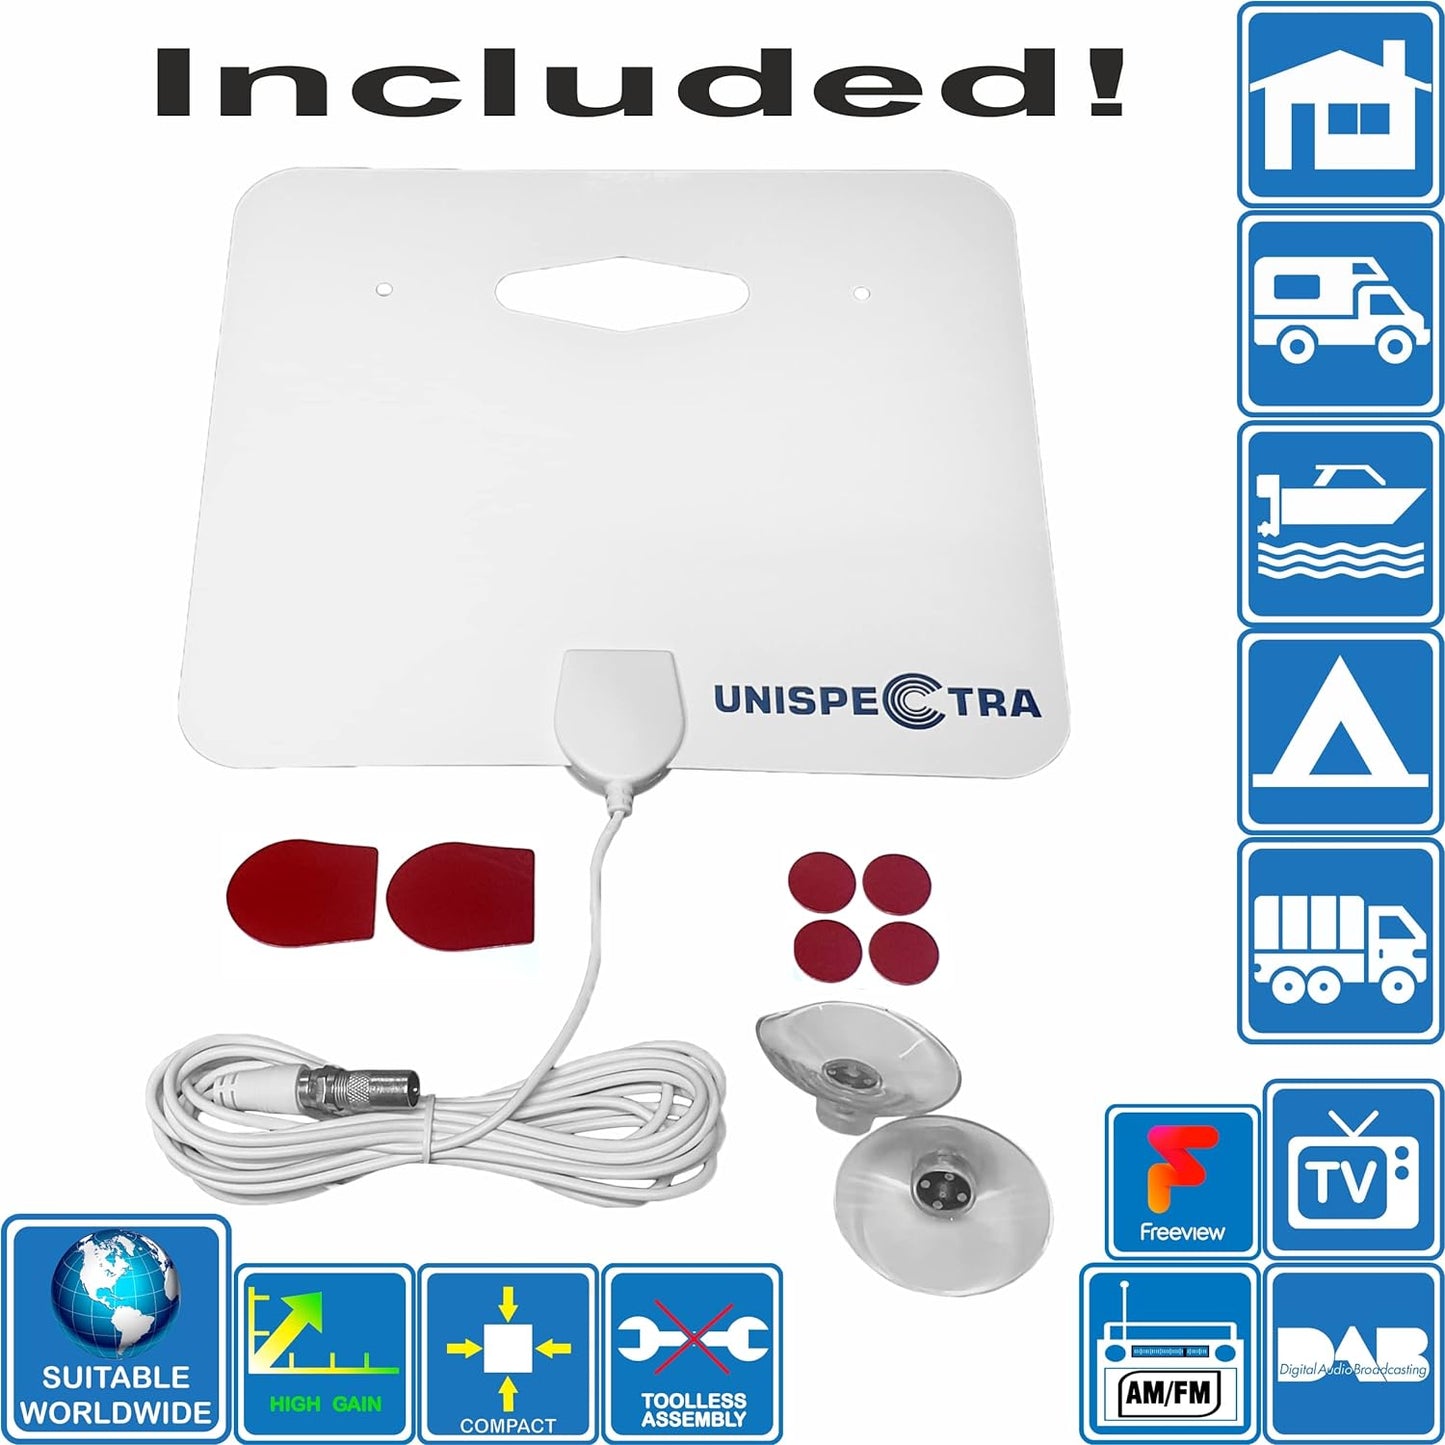 14" Unispectra® Smart Ready TV